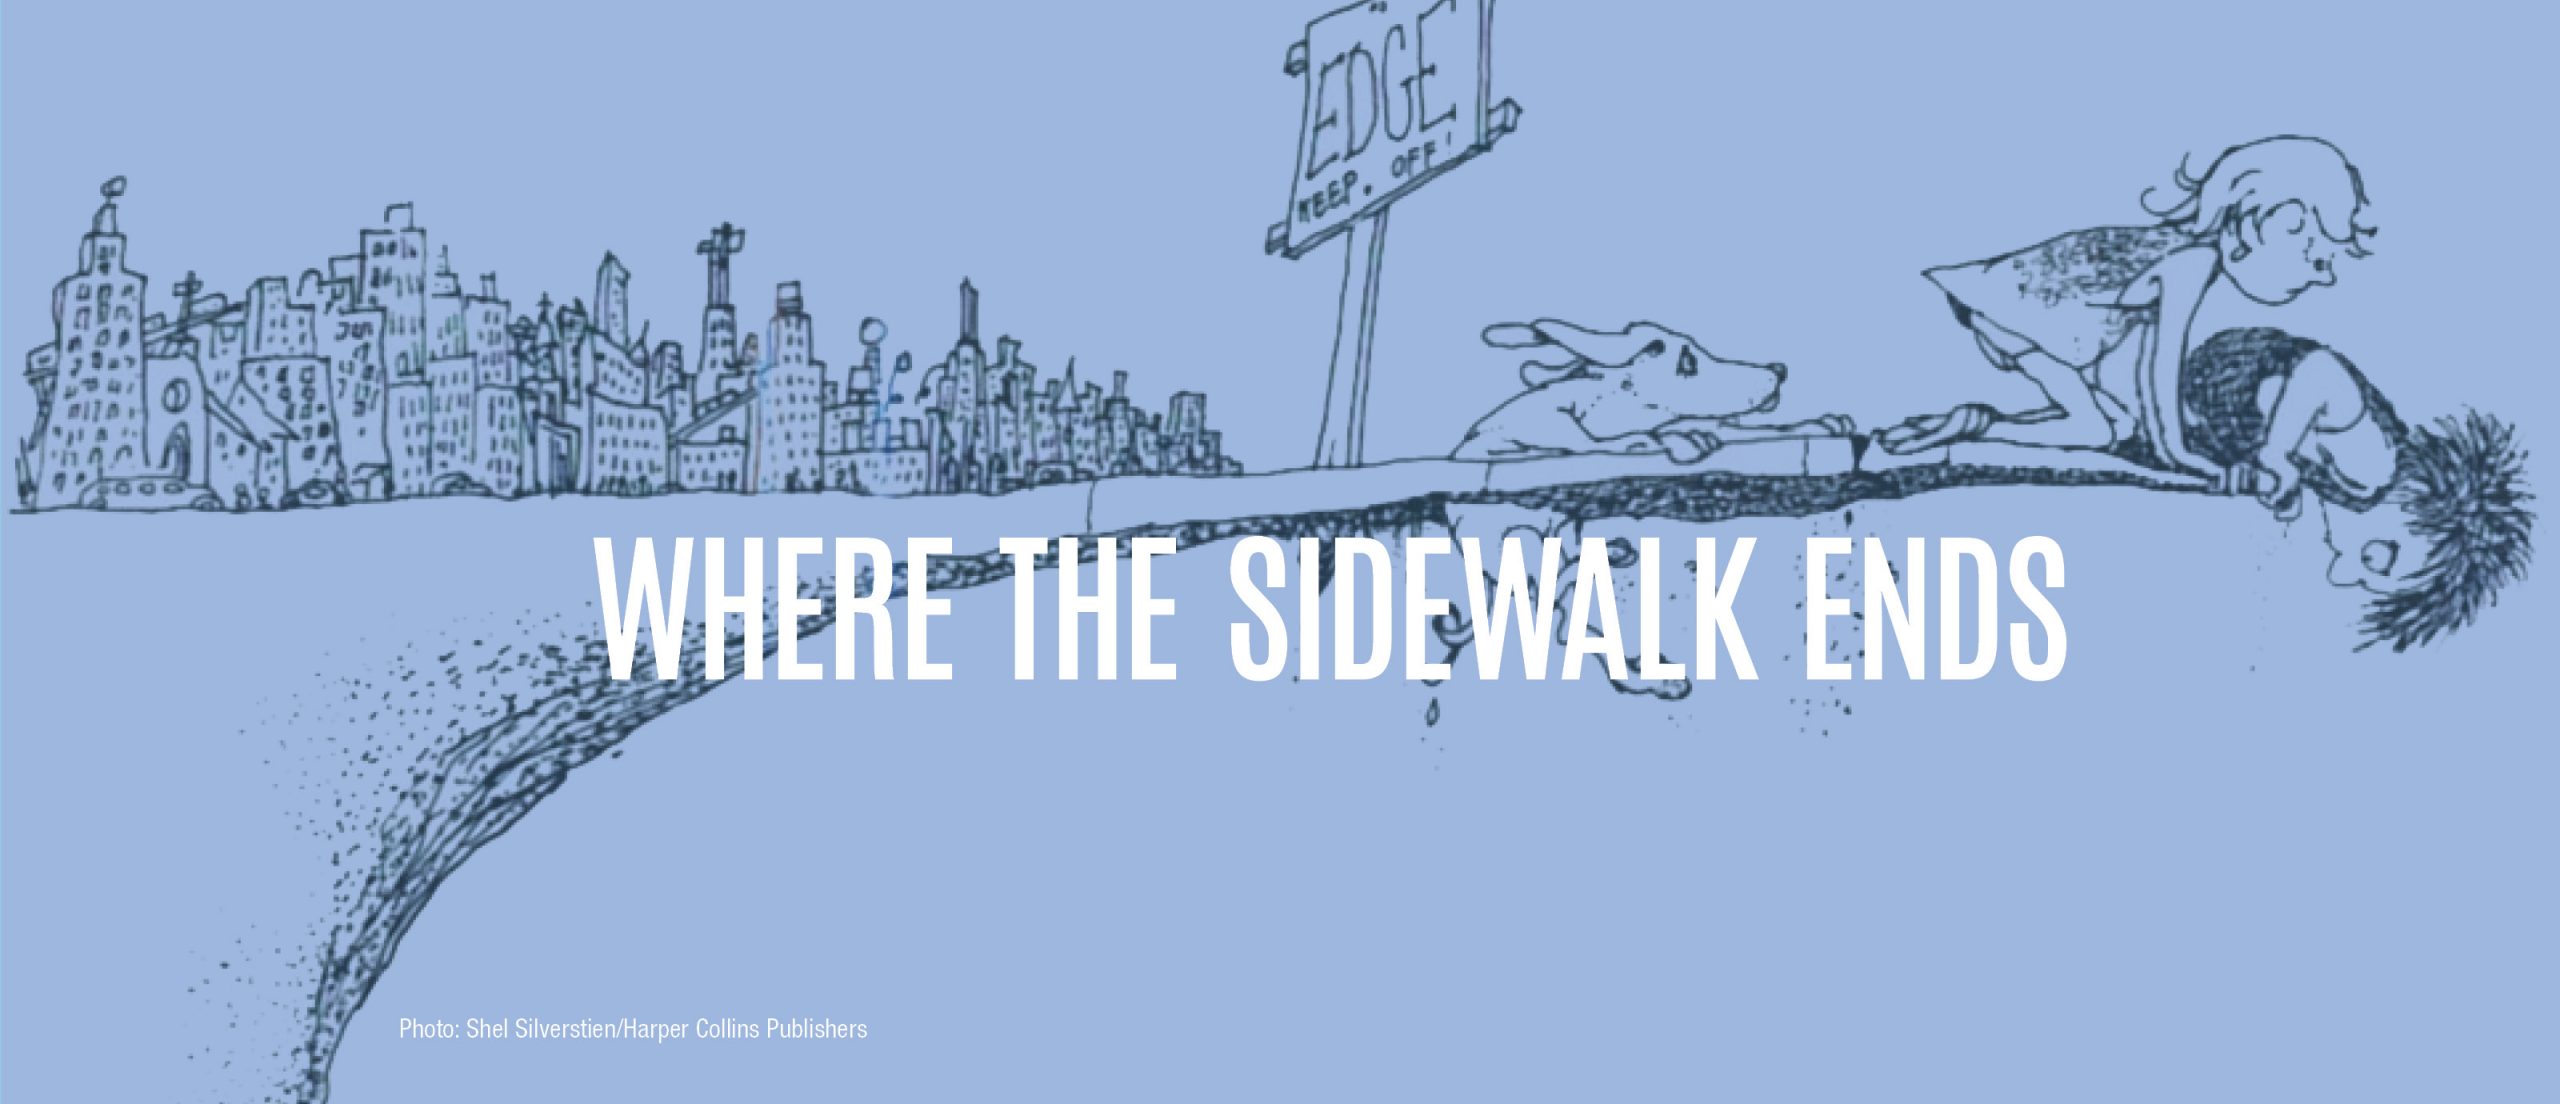 Blog title - Where the sidewalk ends